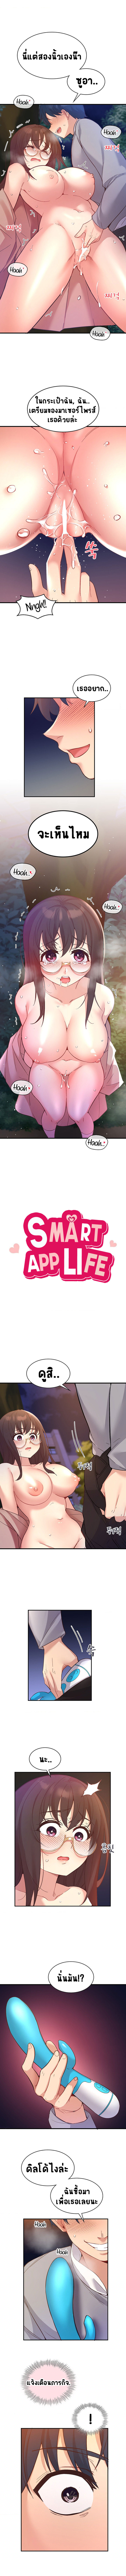 Smart App Life 16 (1)